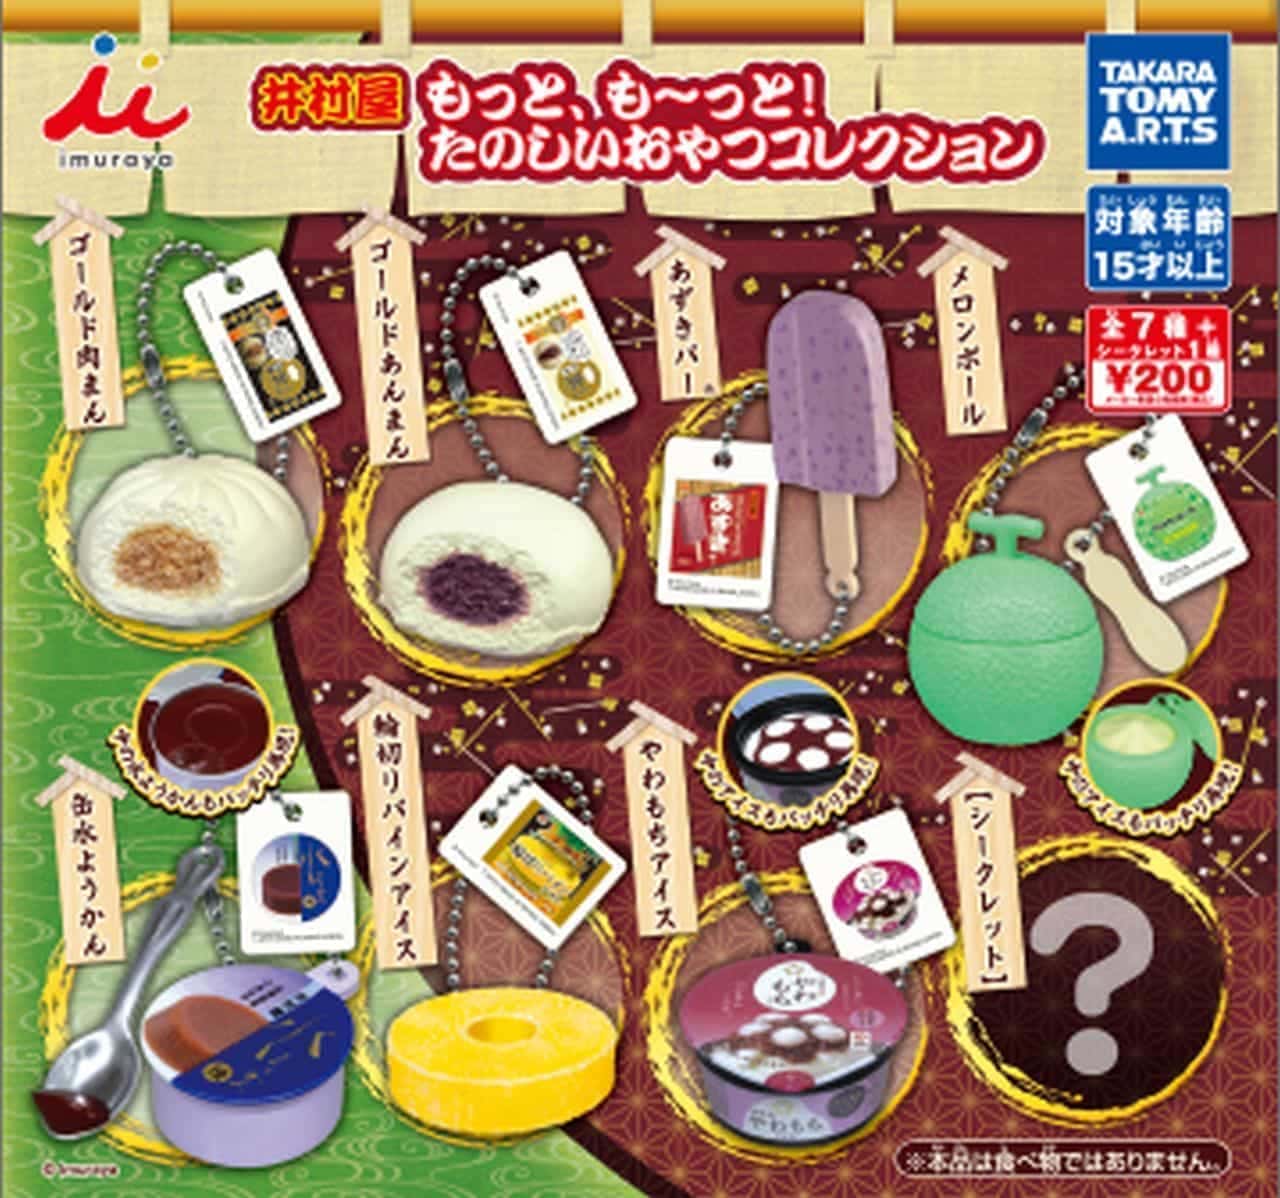 Capsule toy "Imuraya Motto! Fun snack collection"